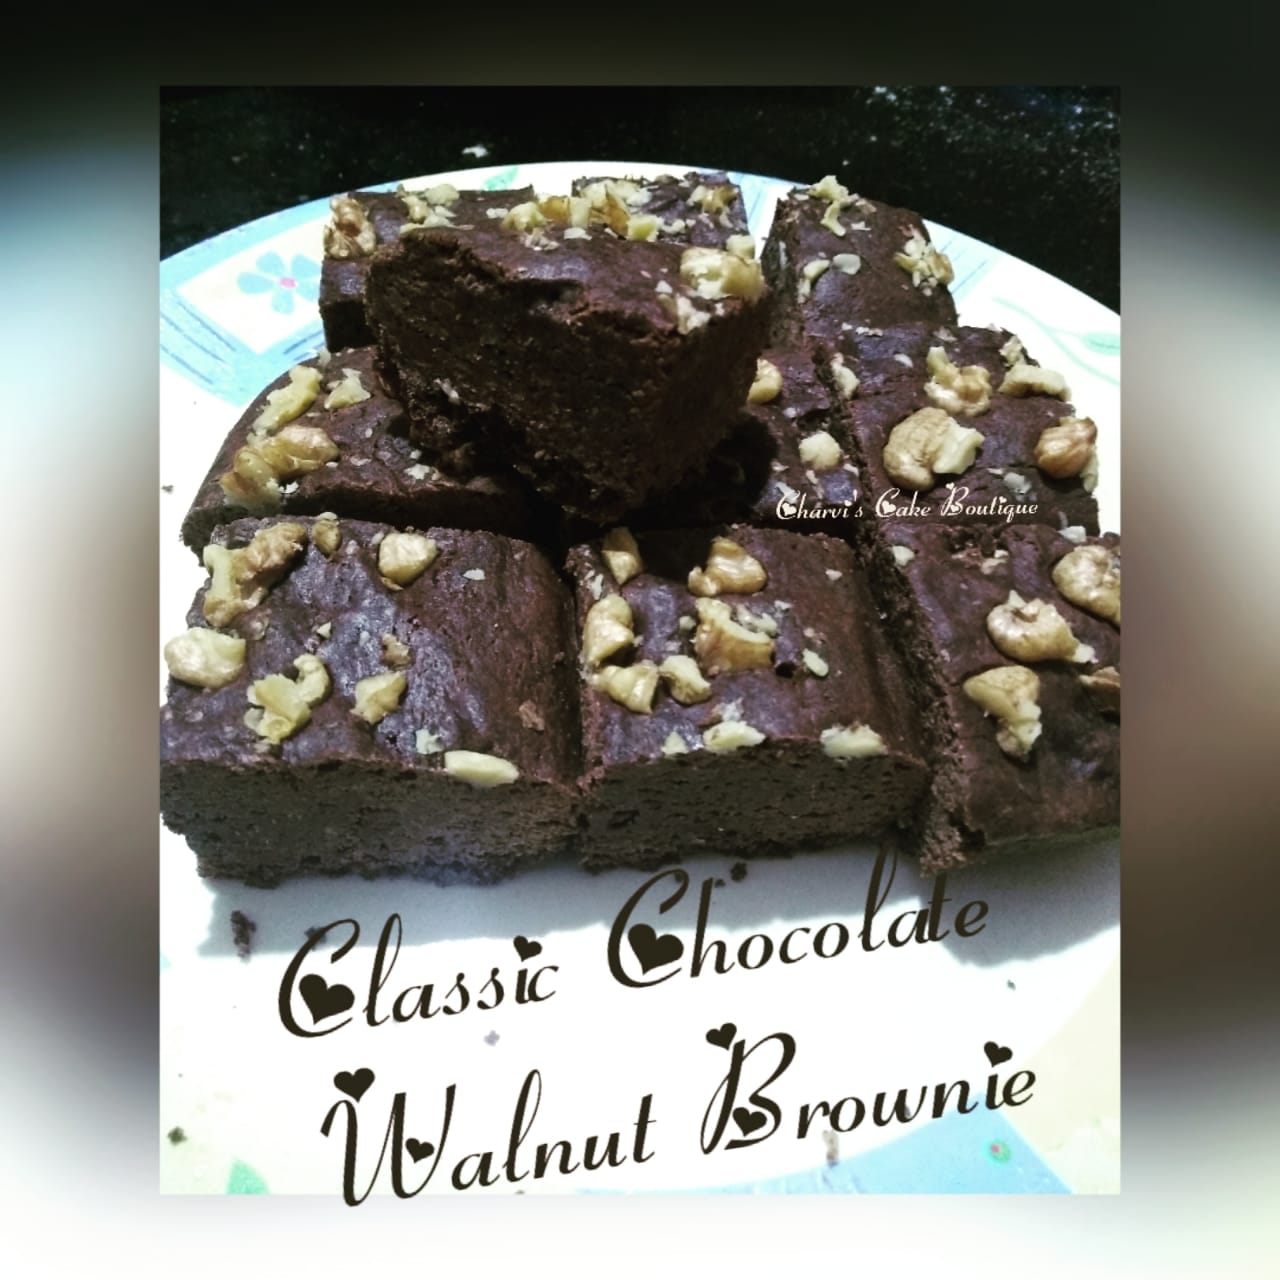 Classic Chocolate Walnut Brownie Designs, Images, Price Near Me